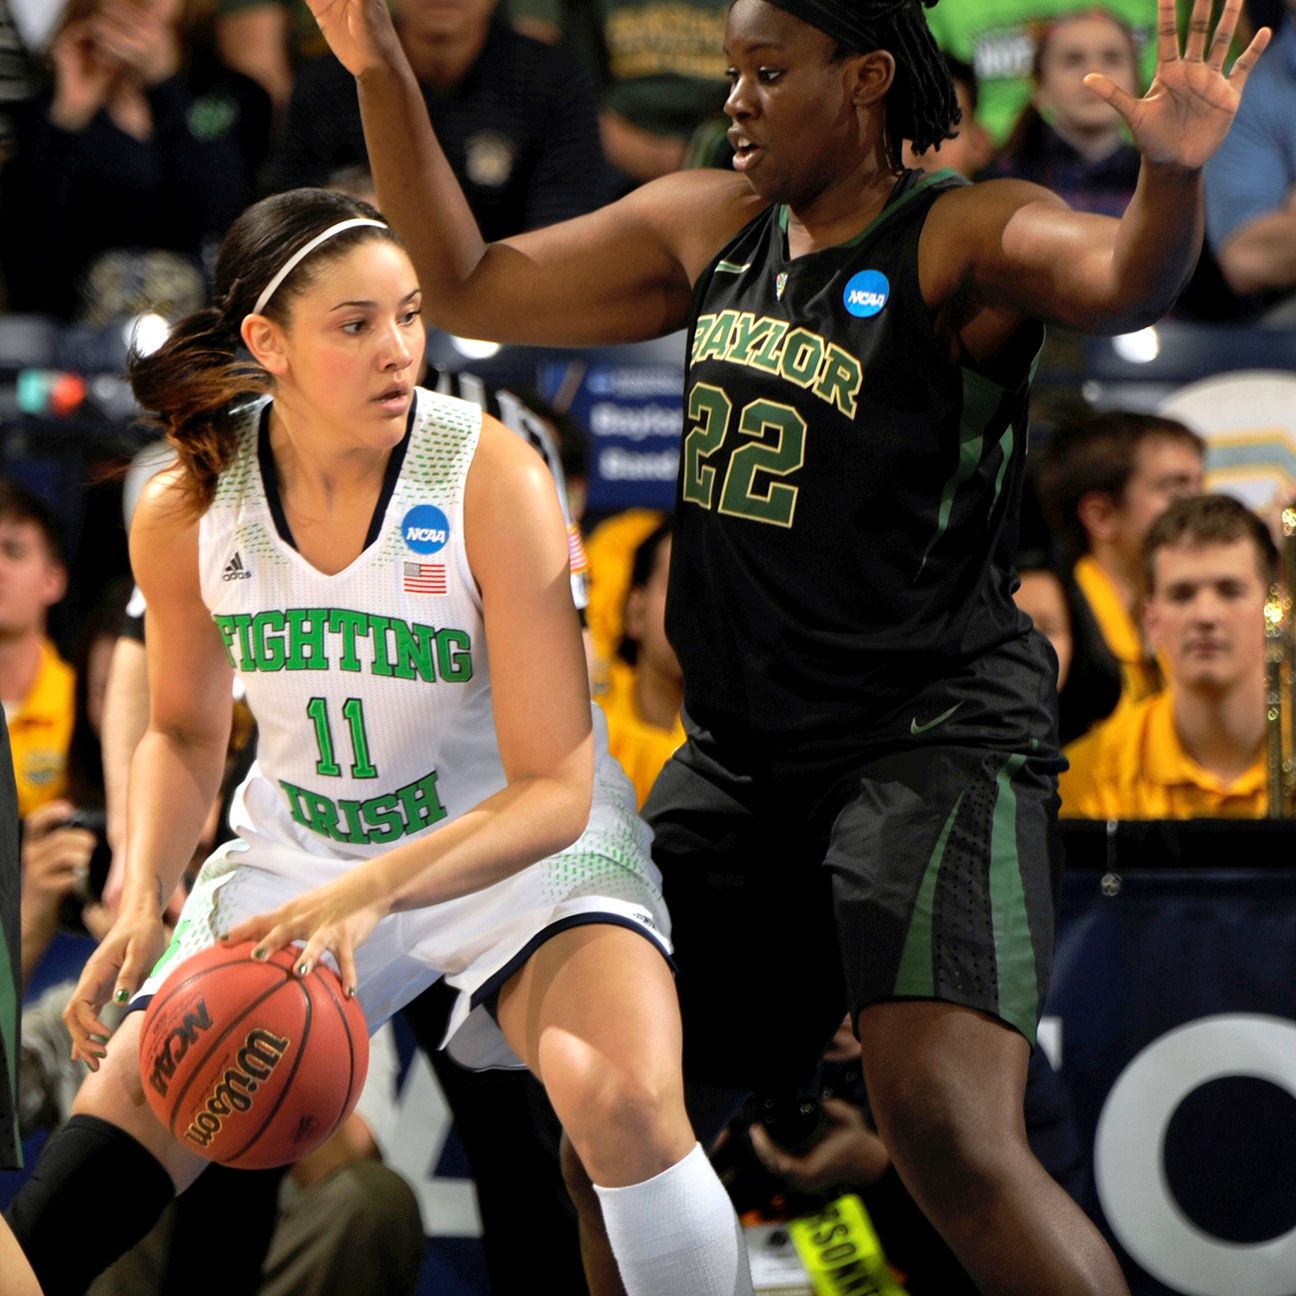 Women's NCAA tournament 2014 - Notre Dame Fighting Irish 88, Baylor Lady Bears 691296 x 1296